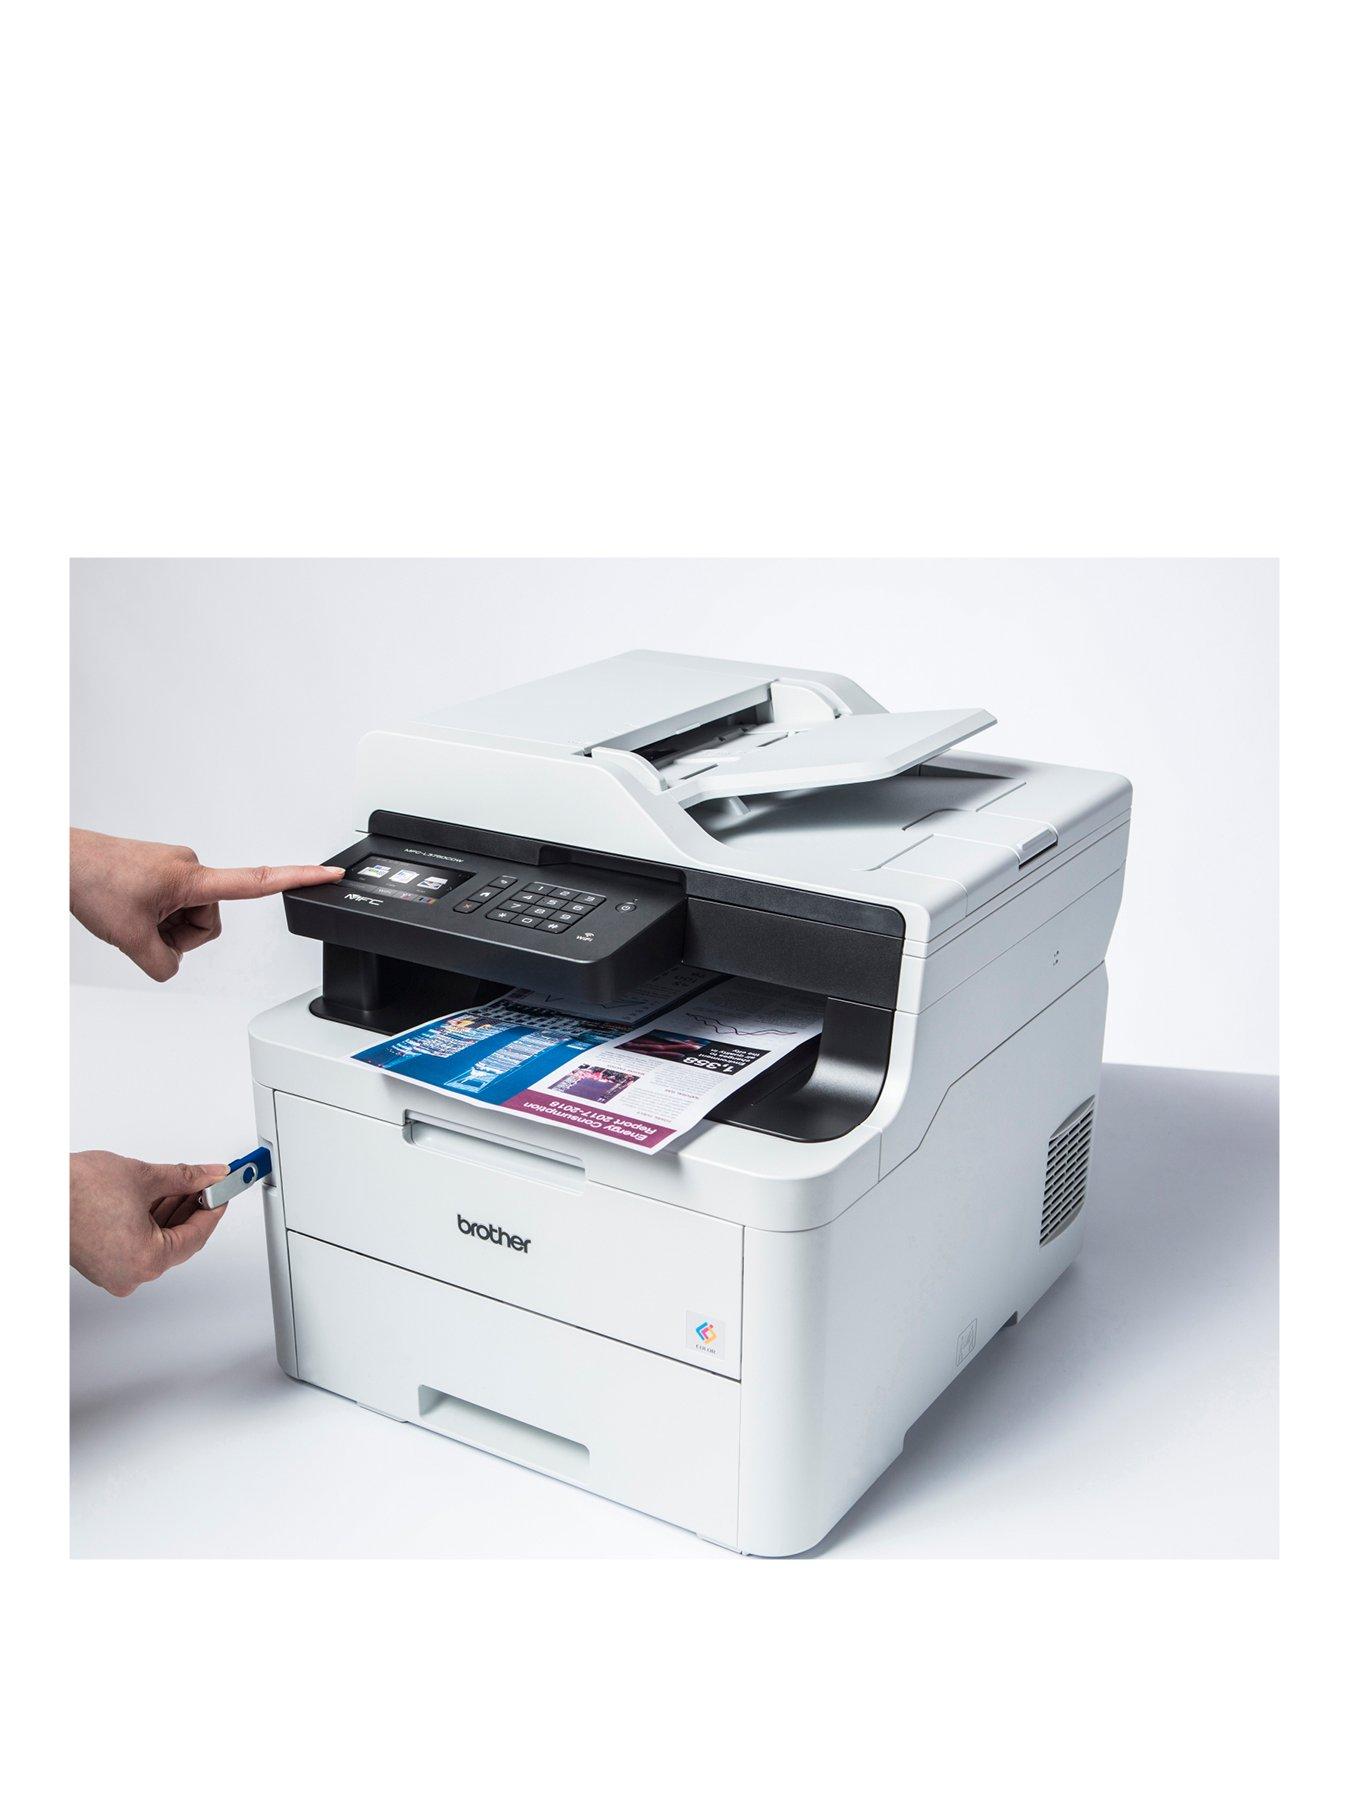 MFC-L3750CDW, Colour LED 4-in-1 printer